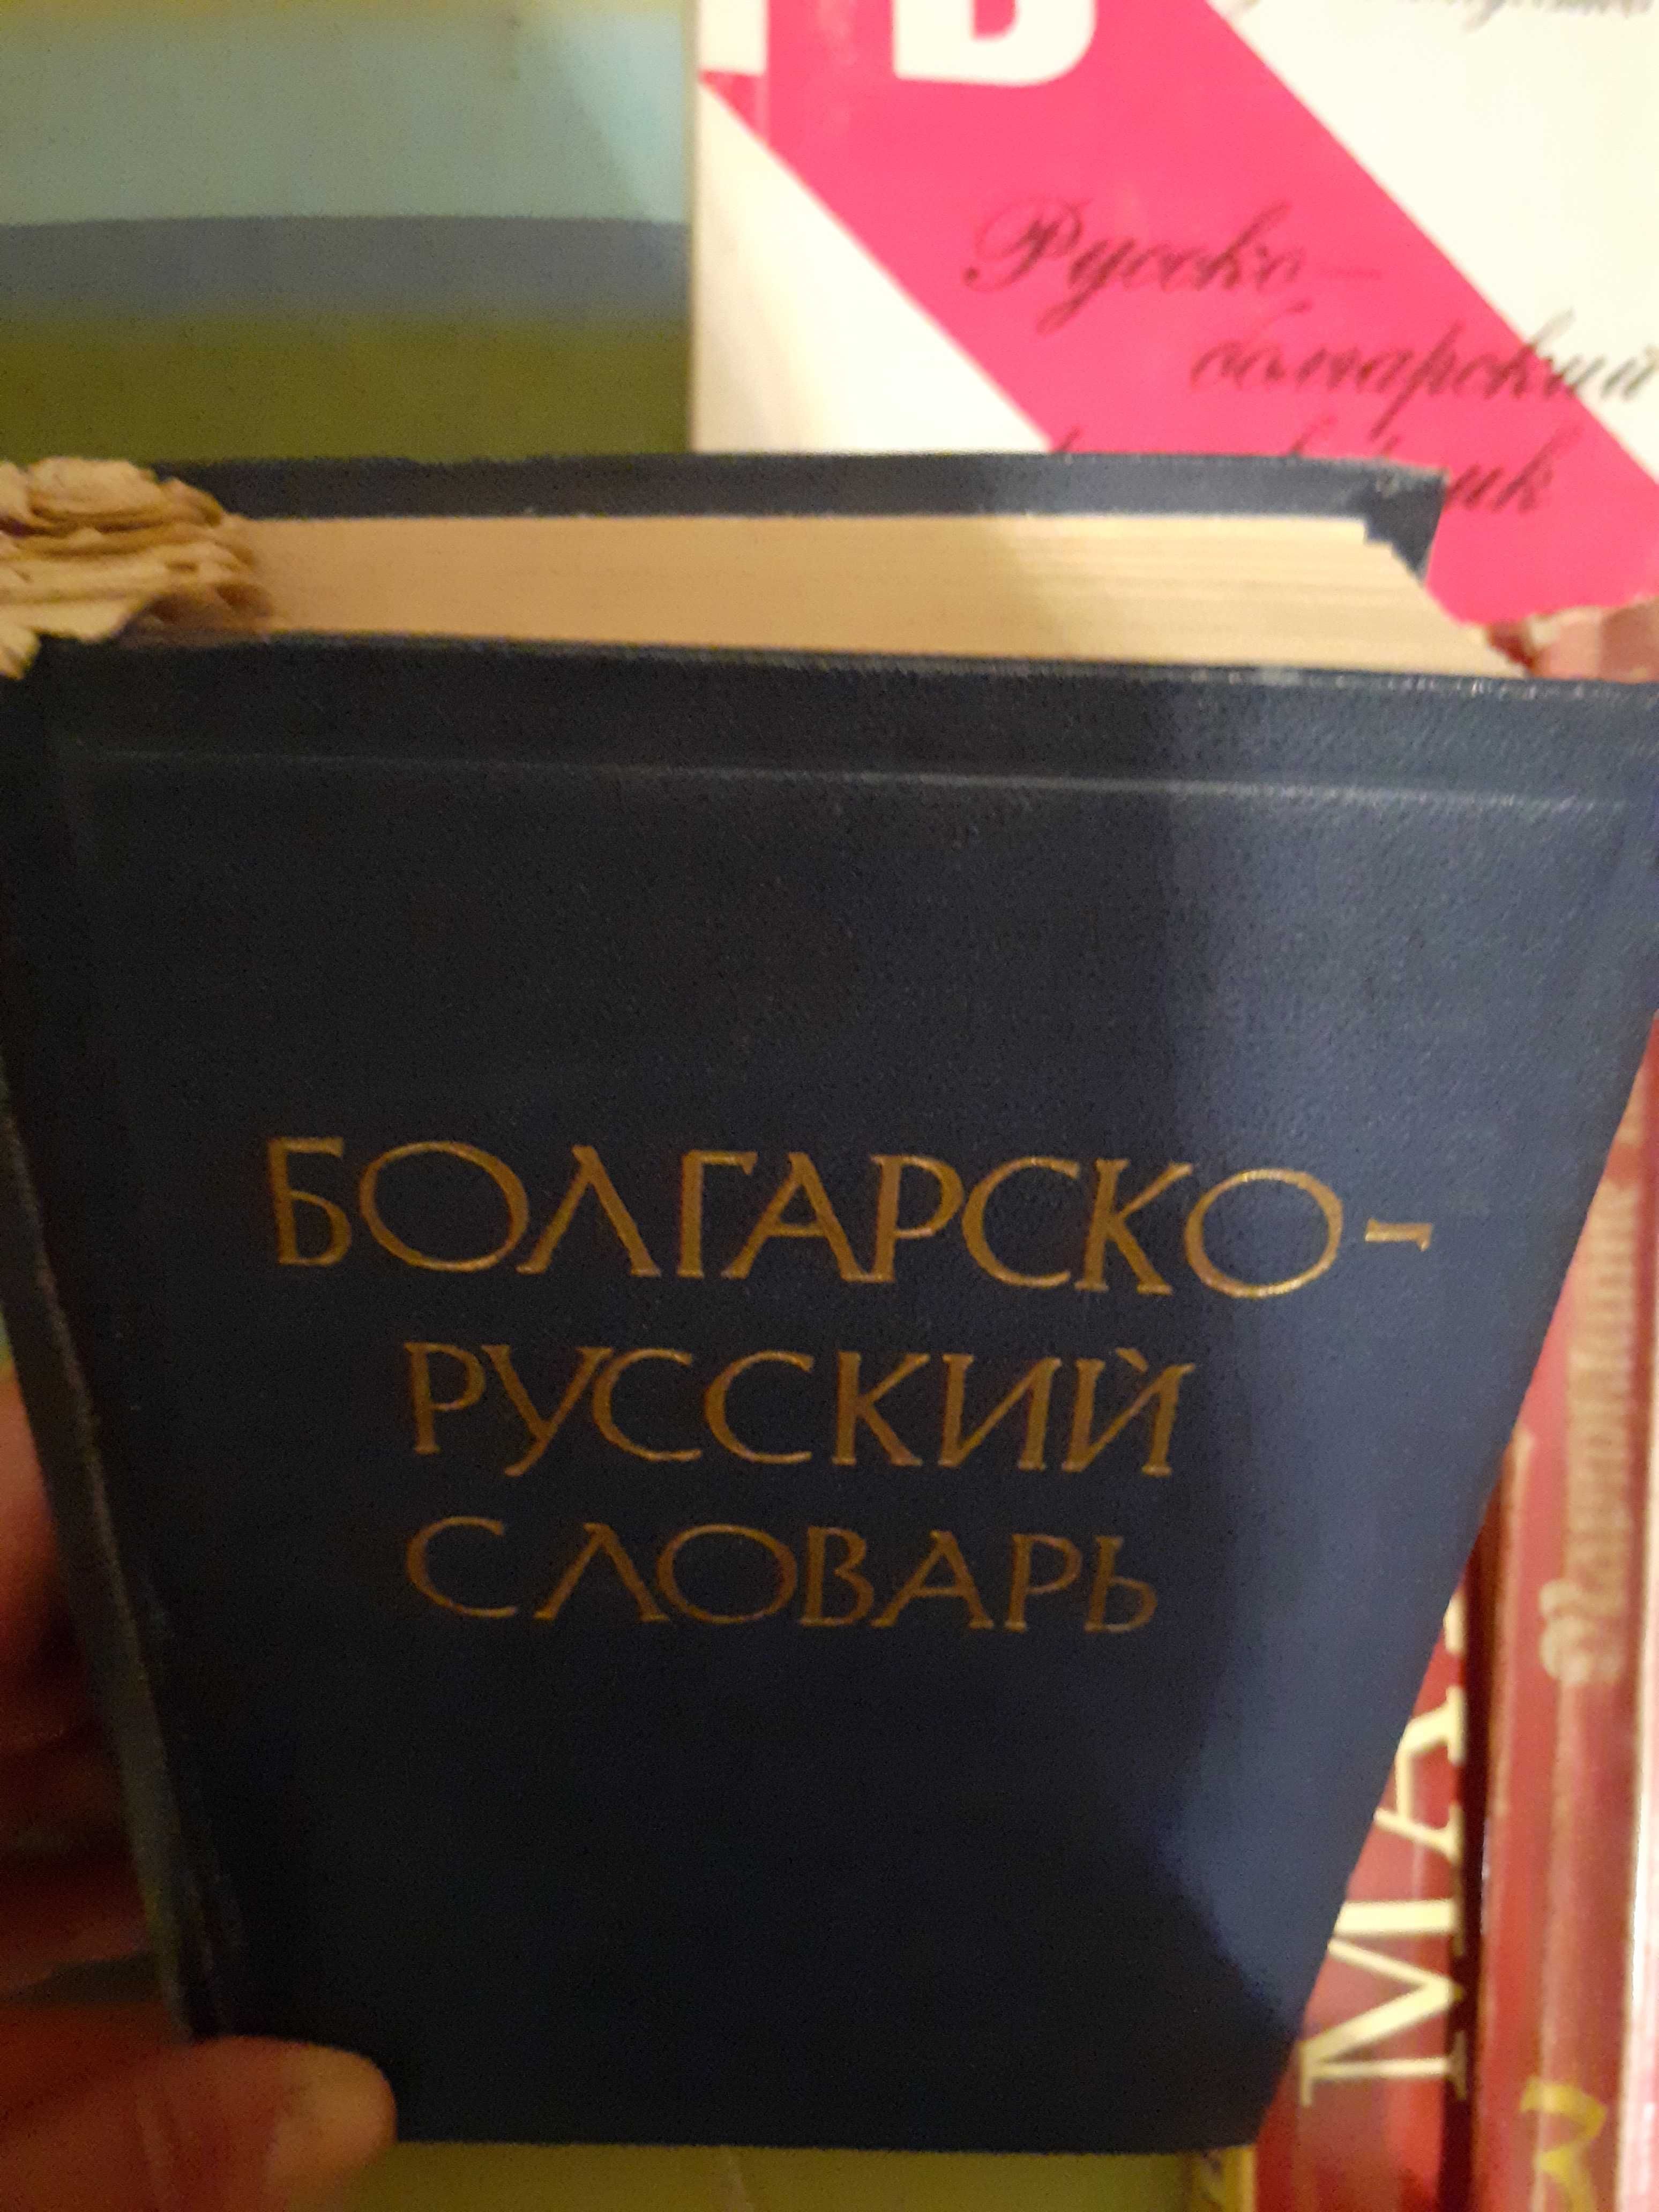 Българо-руски речник